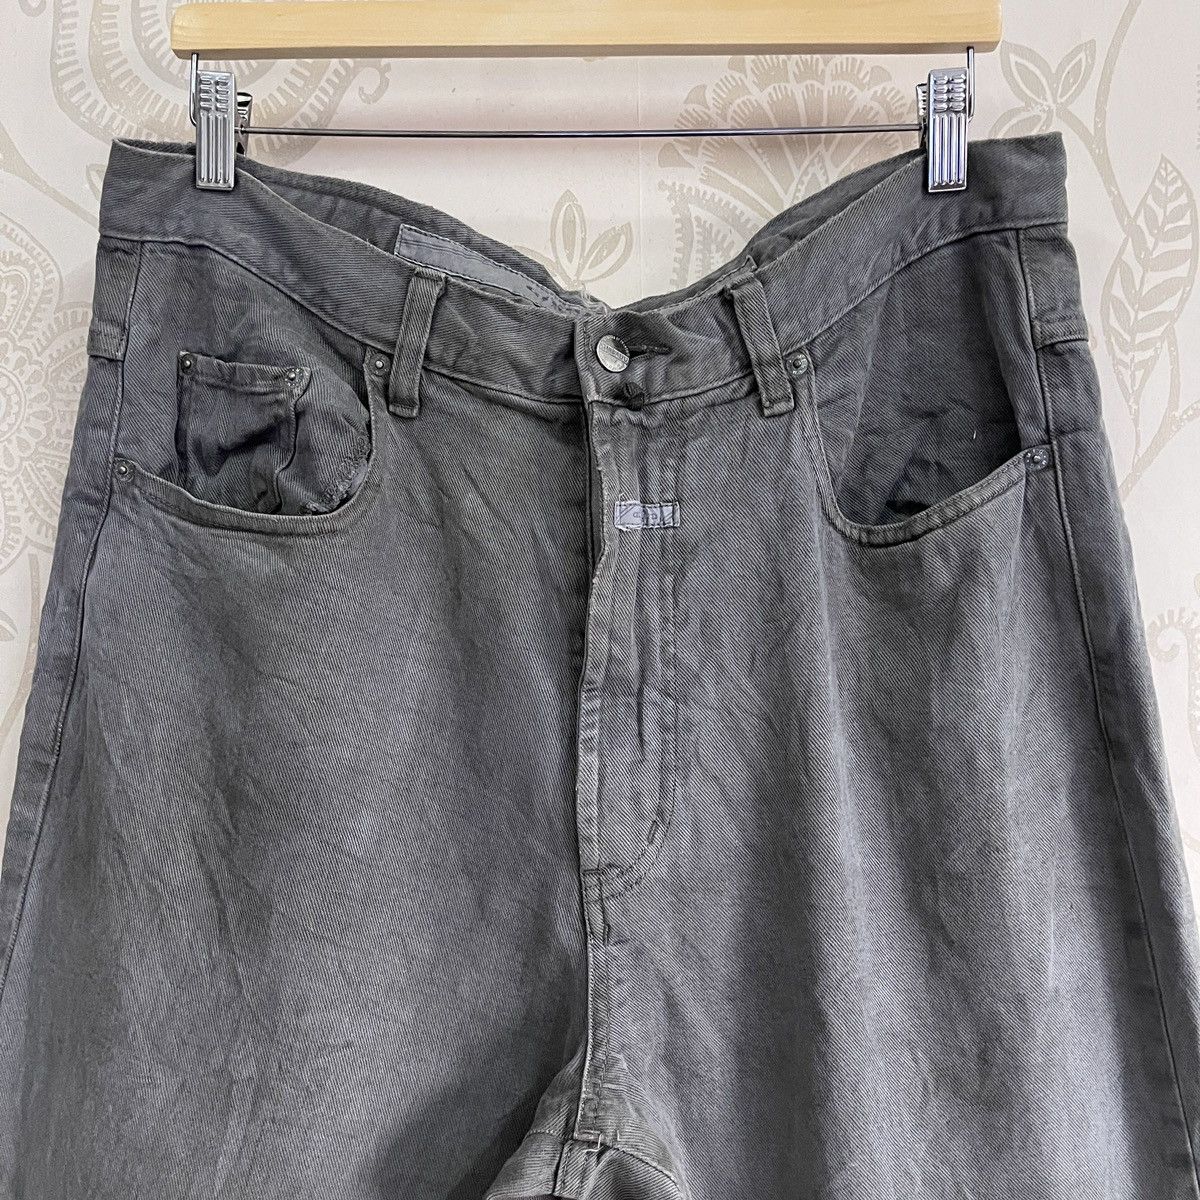 Vintage Marithe Francois Girbaud Distressed Denim Jeans - 5